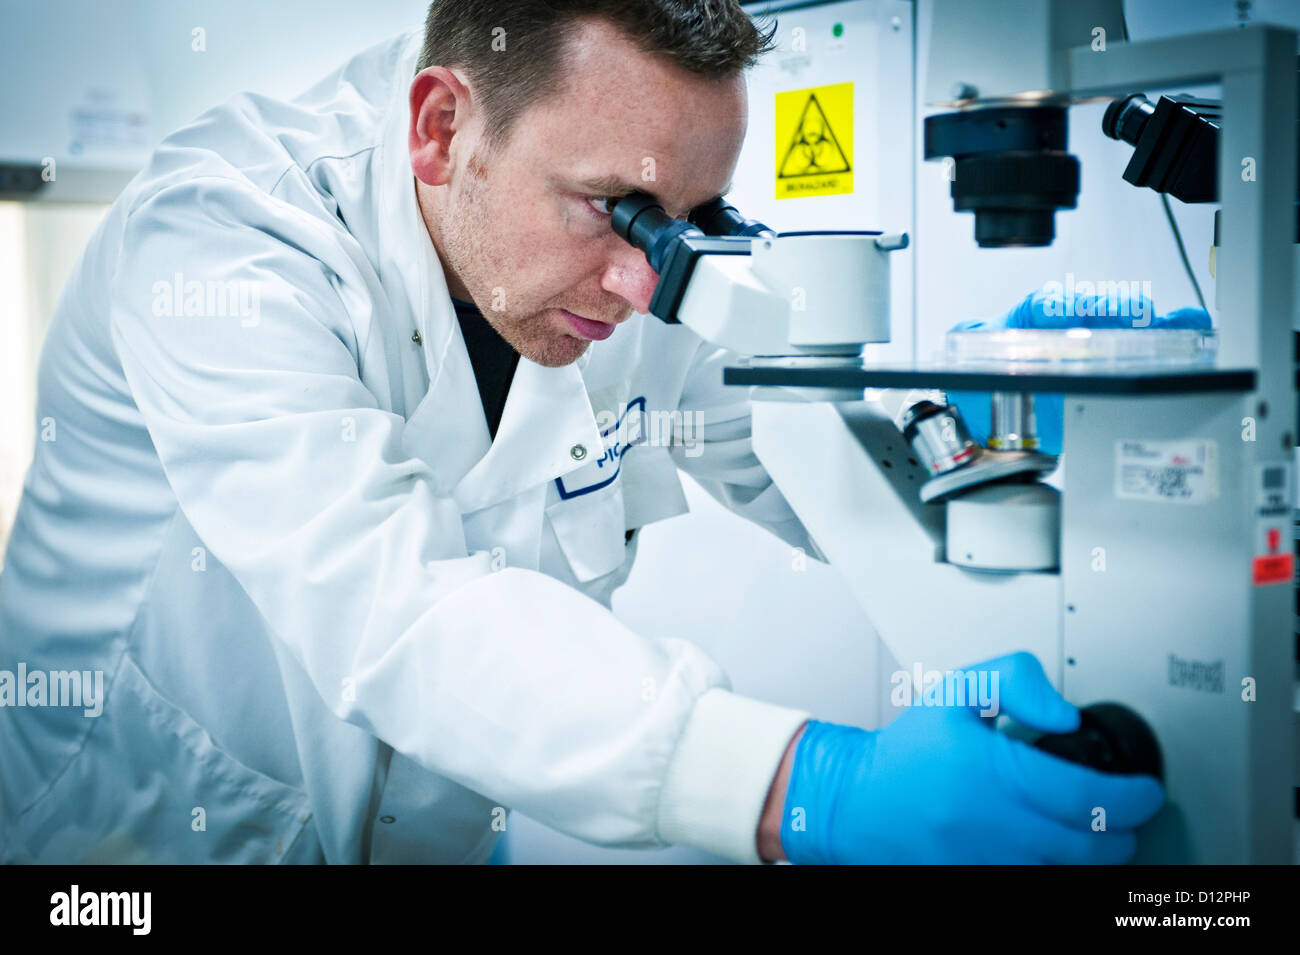 Male scientist or technician uses a microscope in a science laboratory. Stock Photo